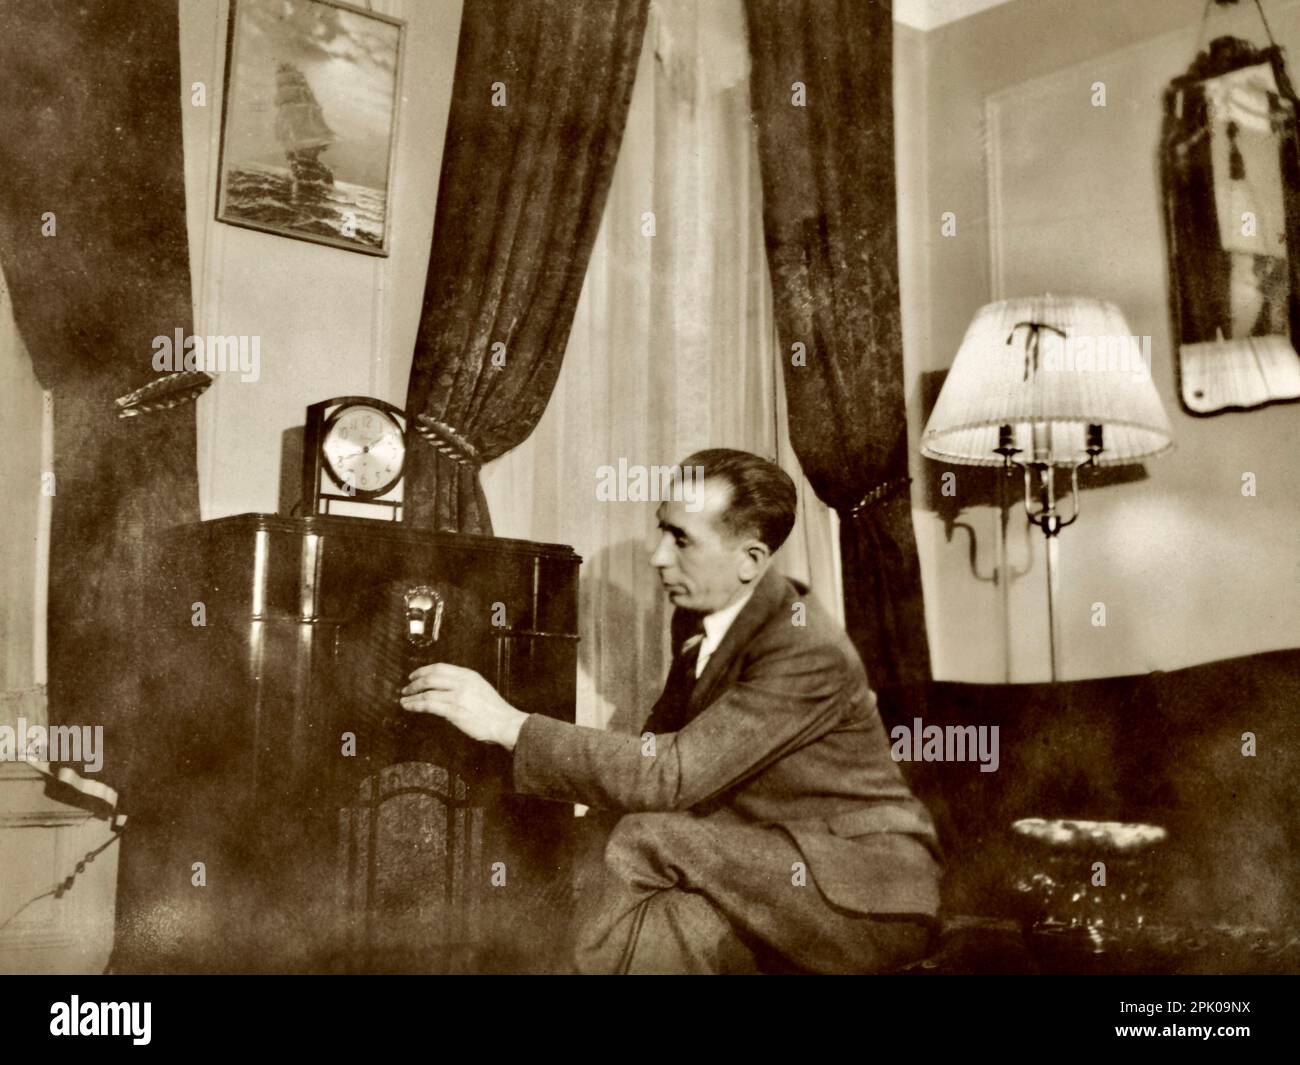 Radio 1930s, 1930s Home Interior, Man tuning Radio Dial, 1930s Decor Stock Photo